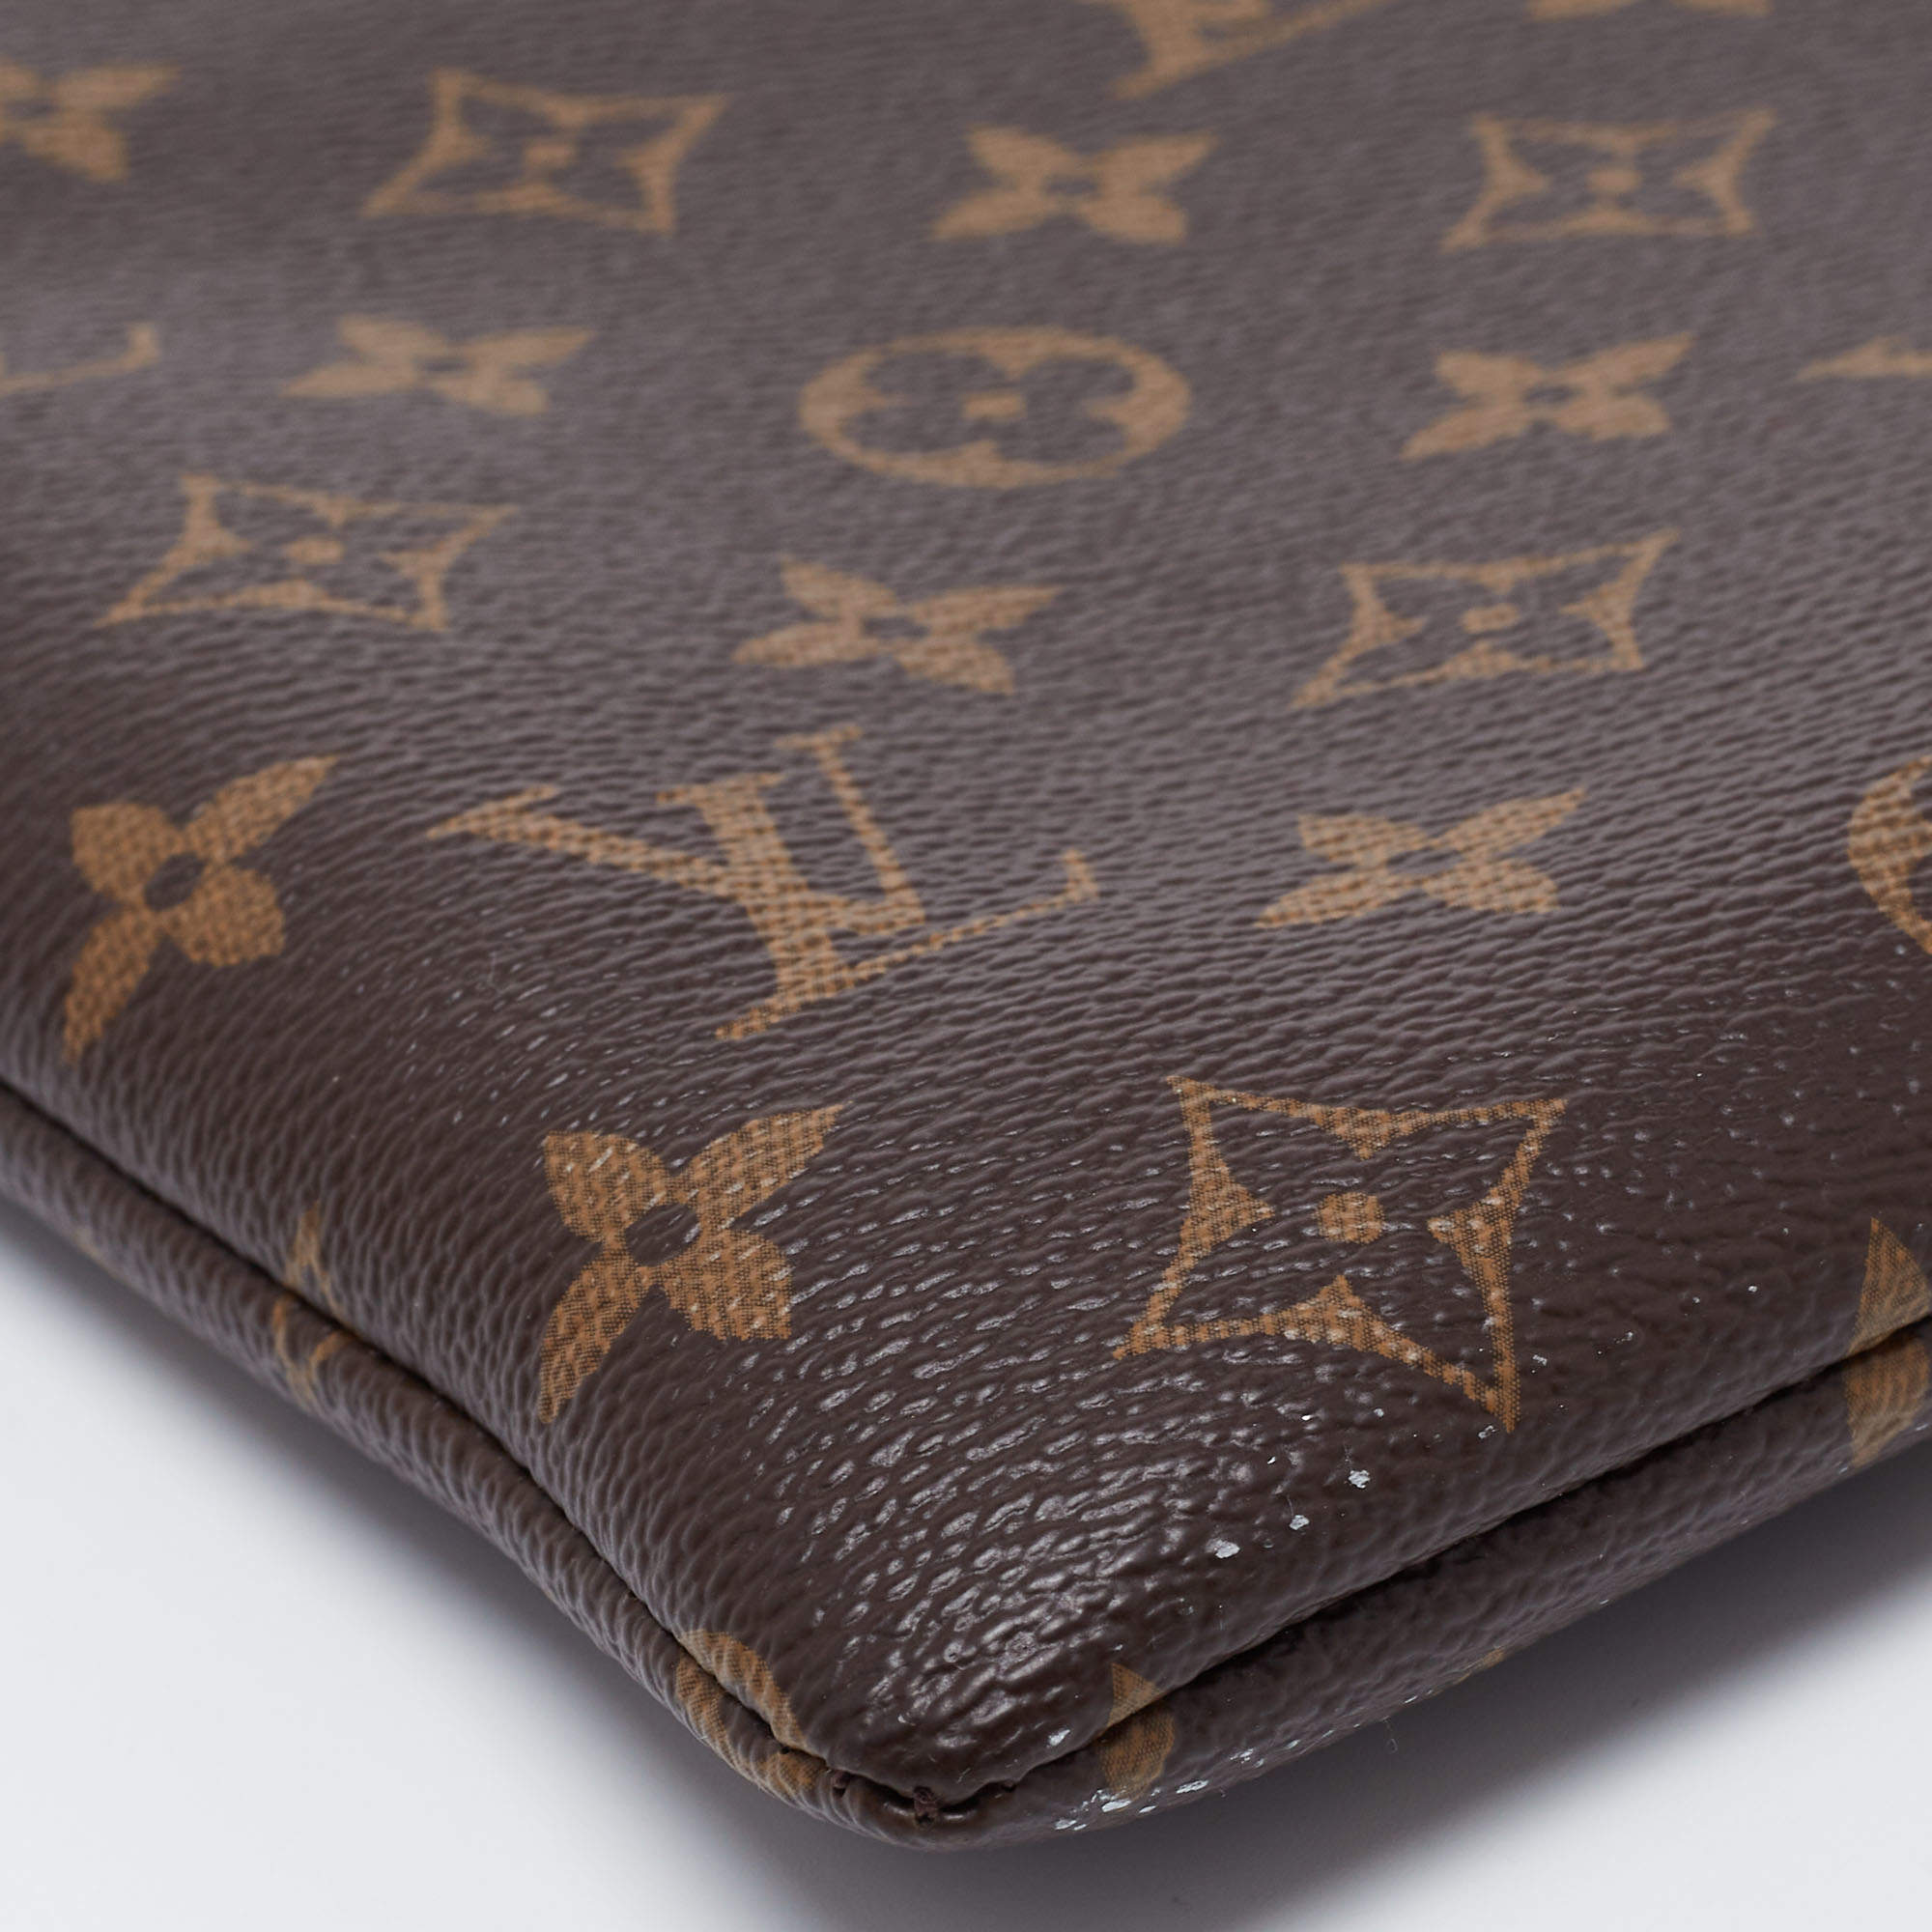 Shop Louis Vuitton MONOGRAM Daily pouch (M62942) by BigUp57